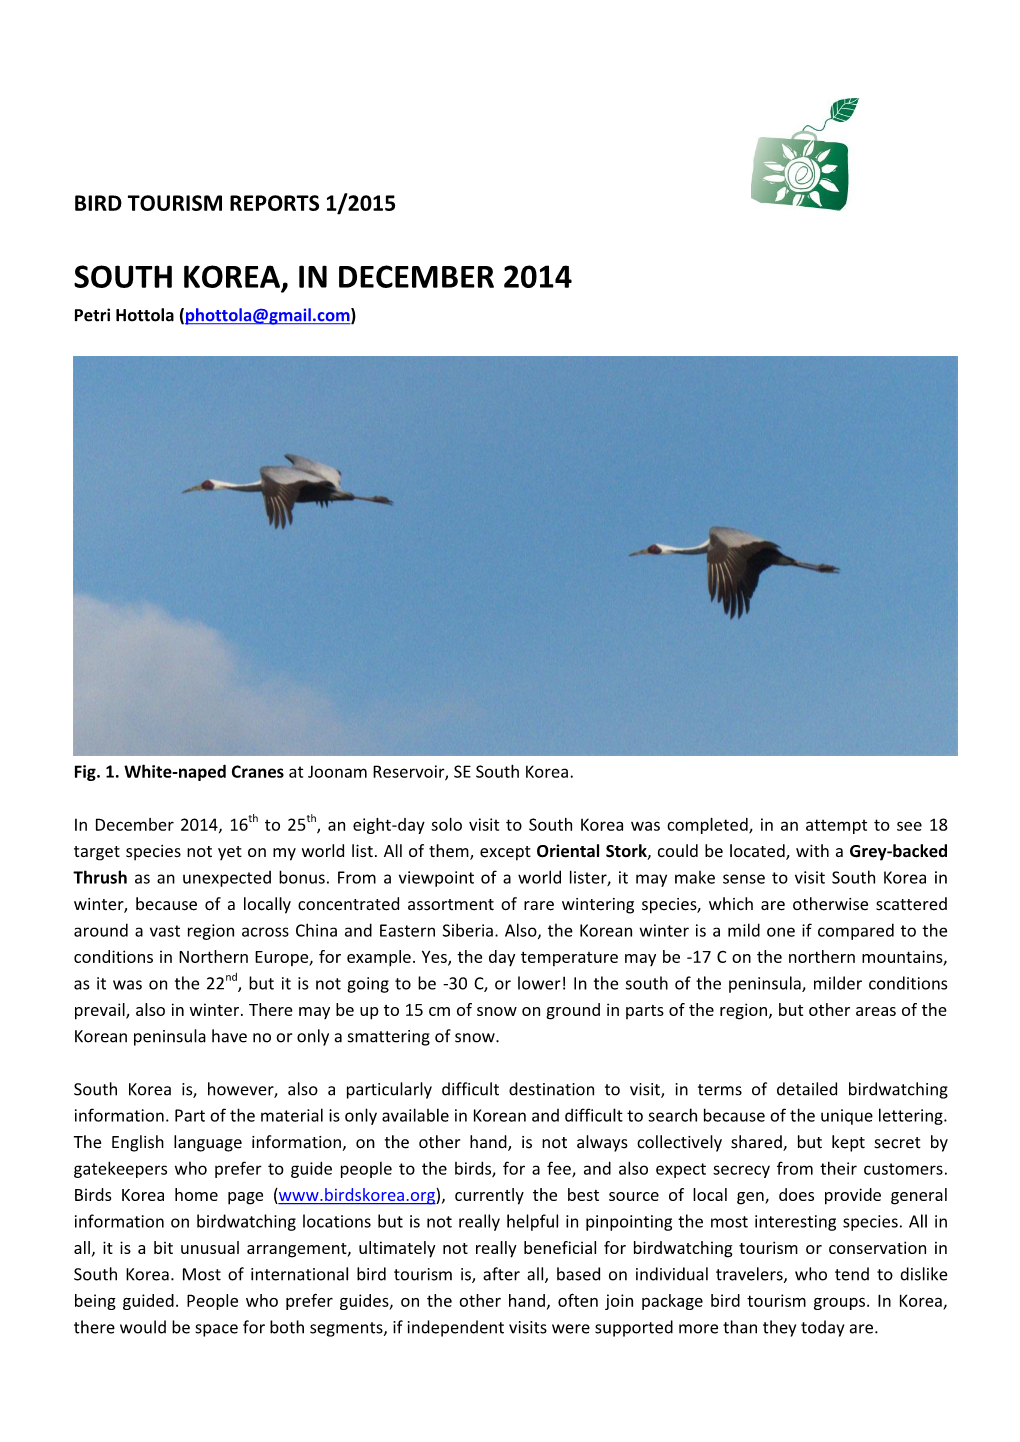 SOUTH KOREA, in DECEMBER 2014 Petri Hottola (Phottola@Gmail.Com)